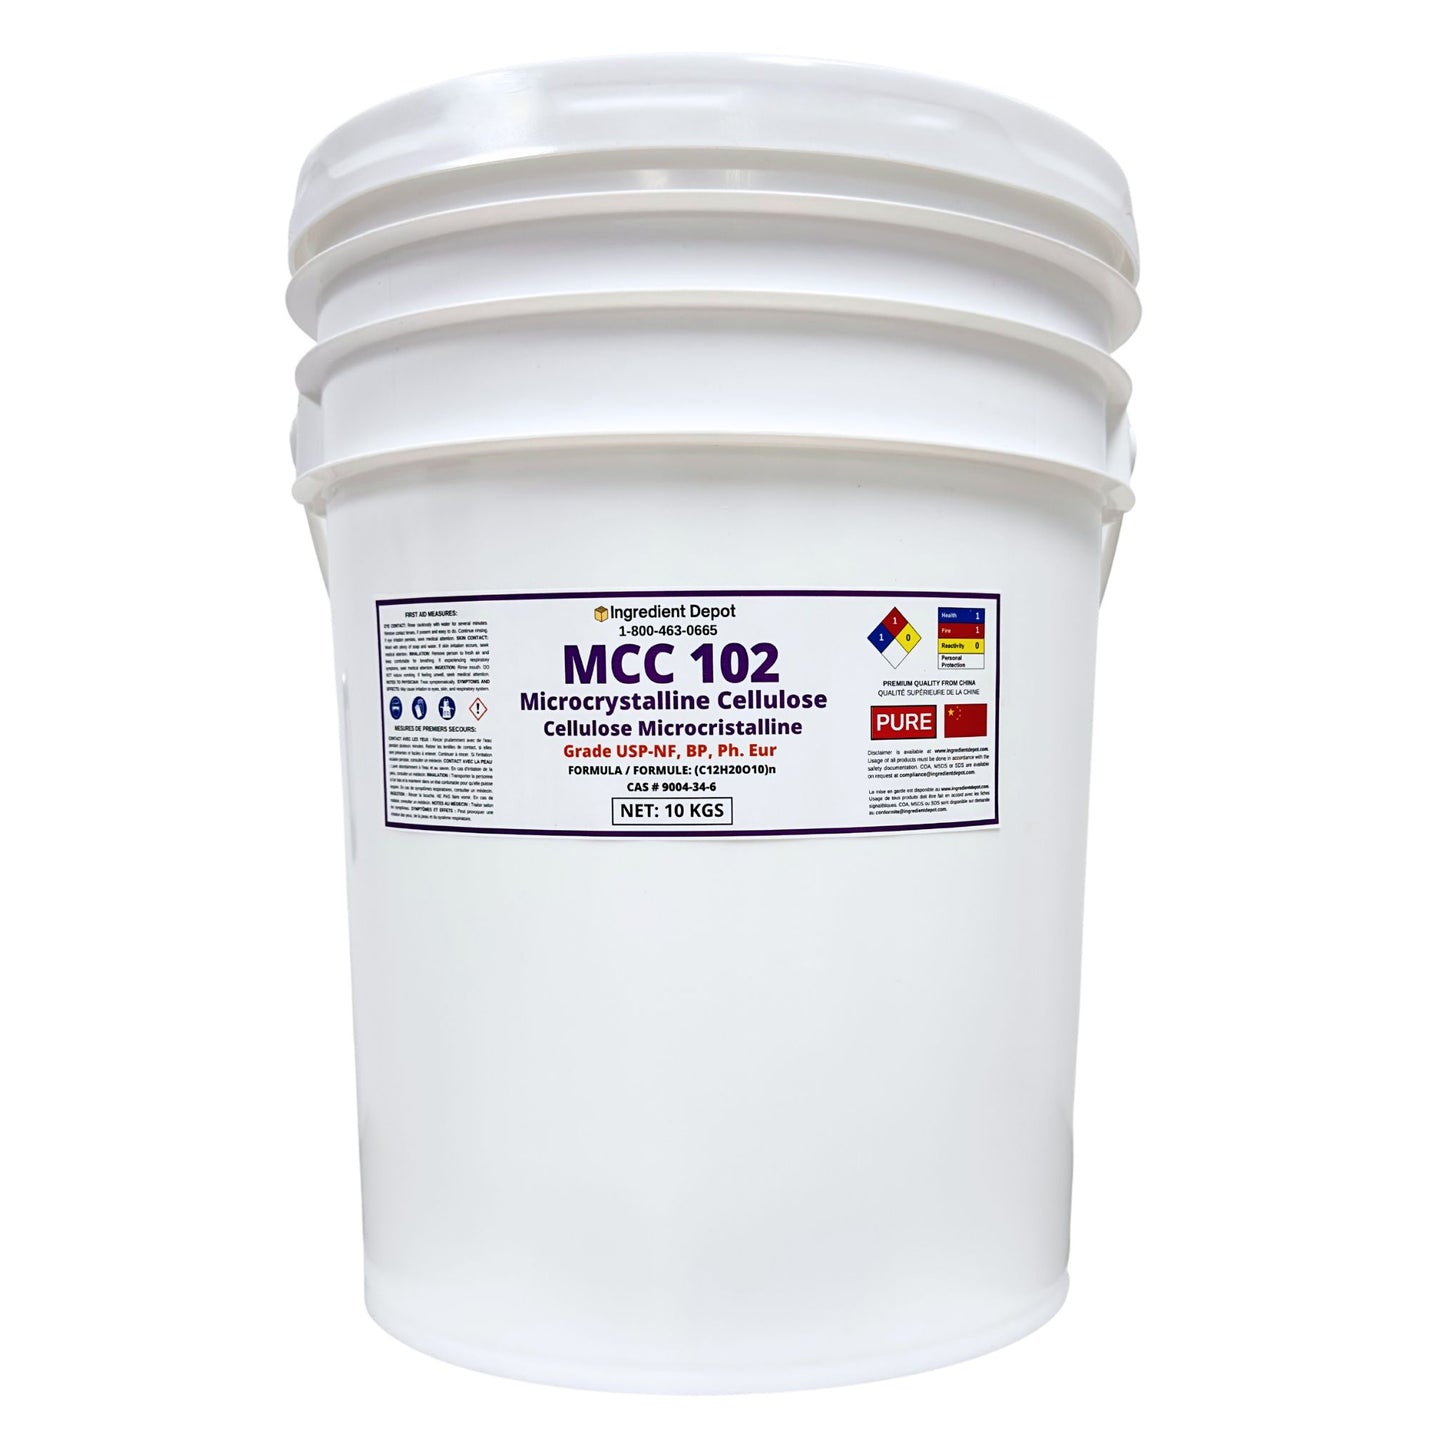 MCC 102 Microcrystalline Cellulose 10 kgs - IngredientDepot.com